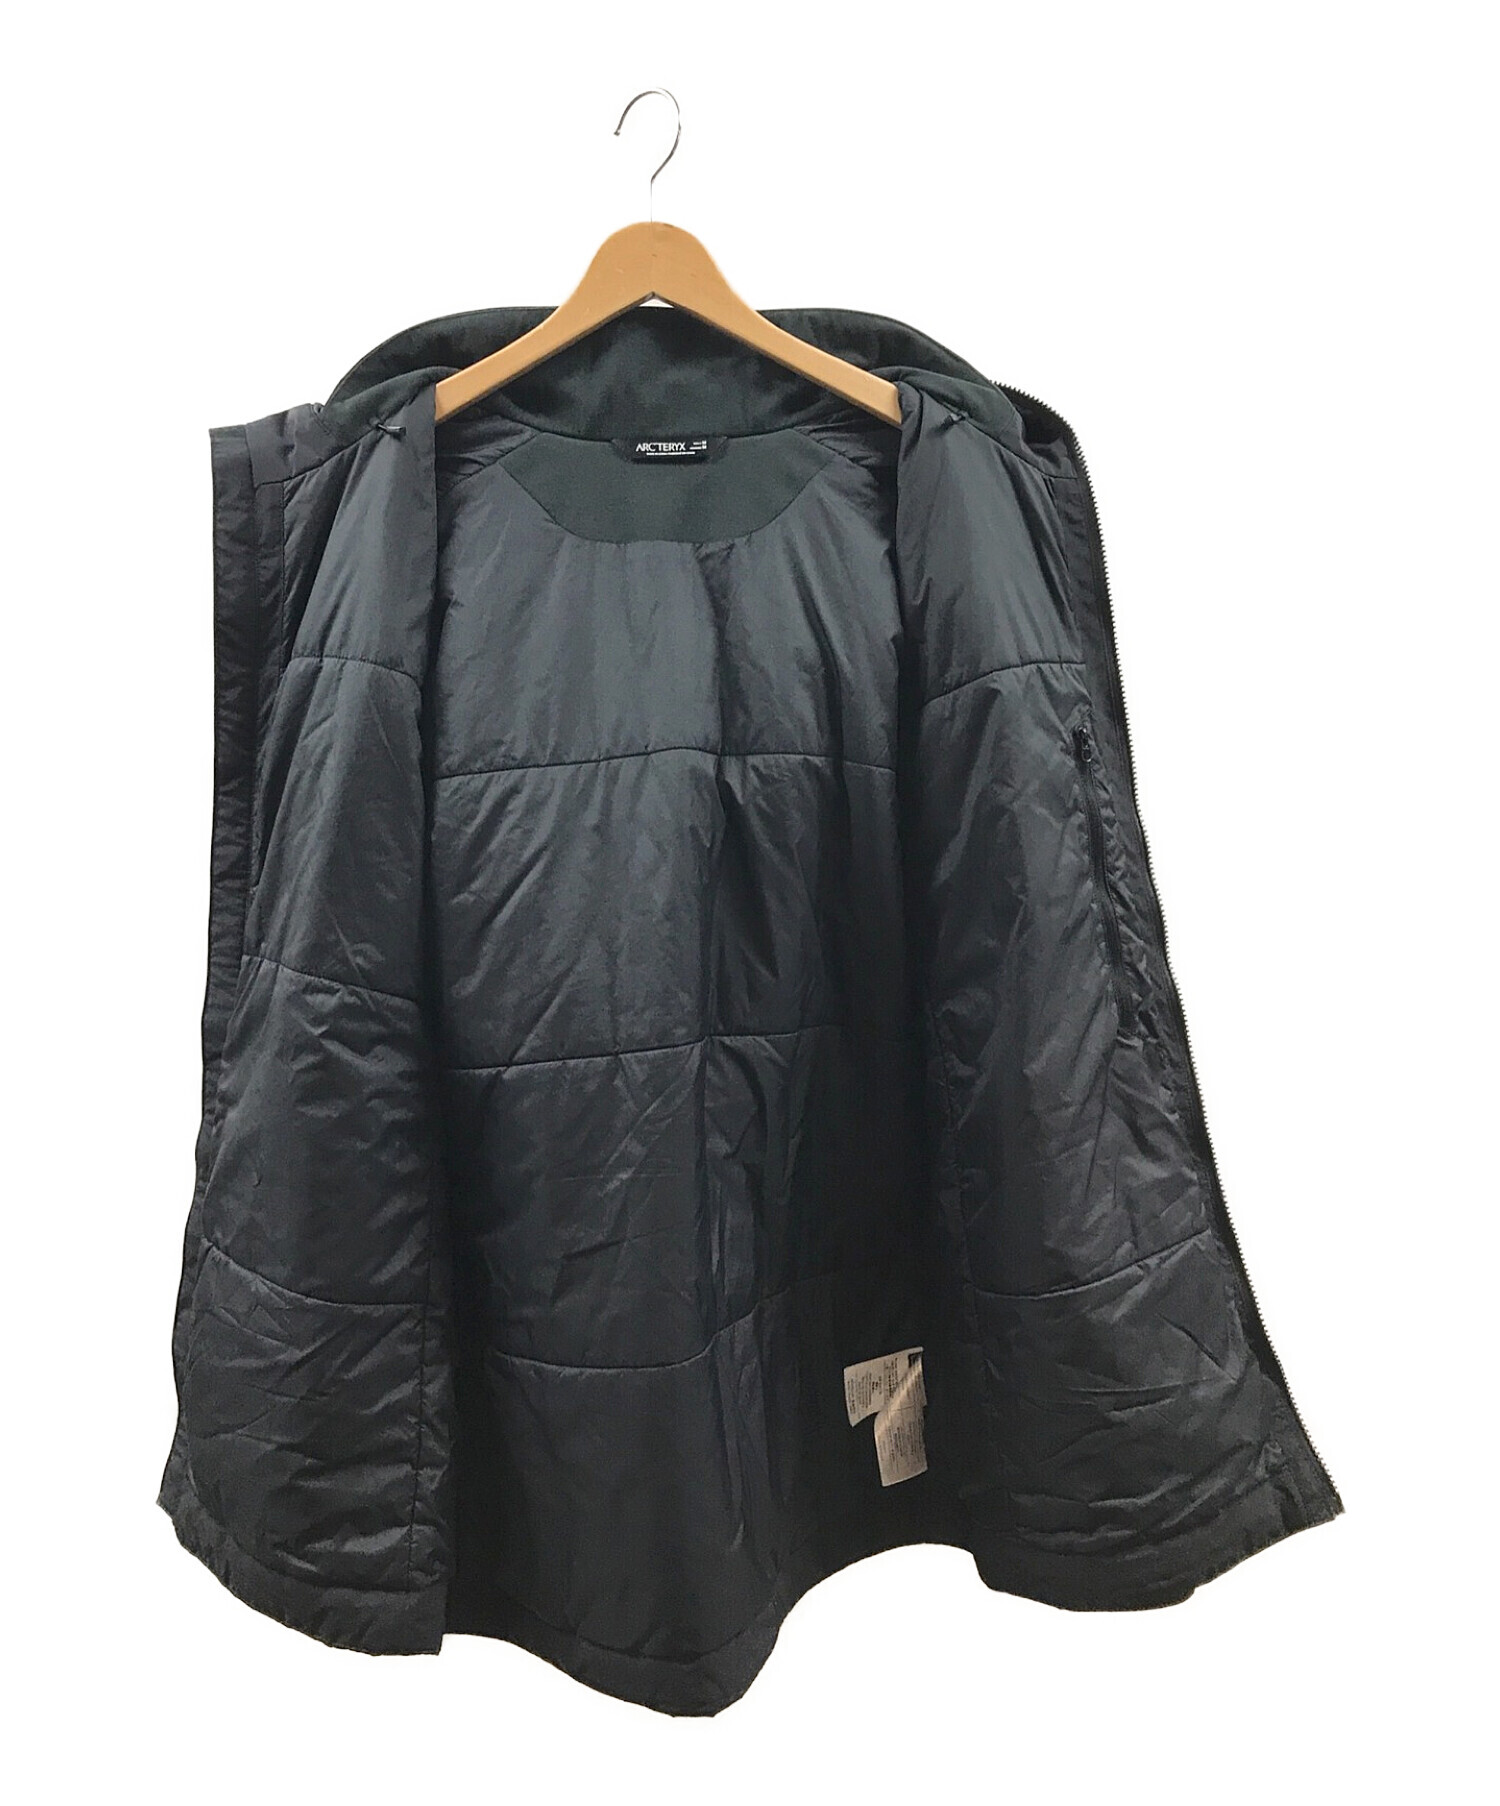 ARC'TERYX (アークテリクス) KODA Jacket ブラック サイズ:M